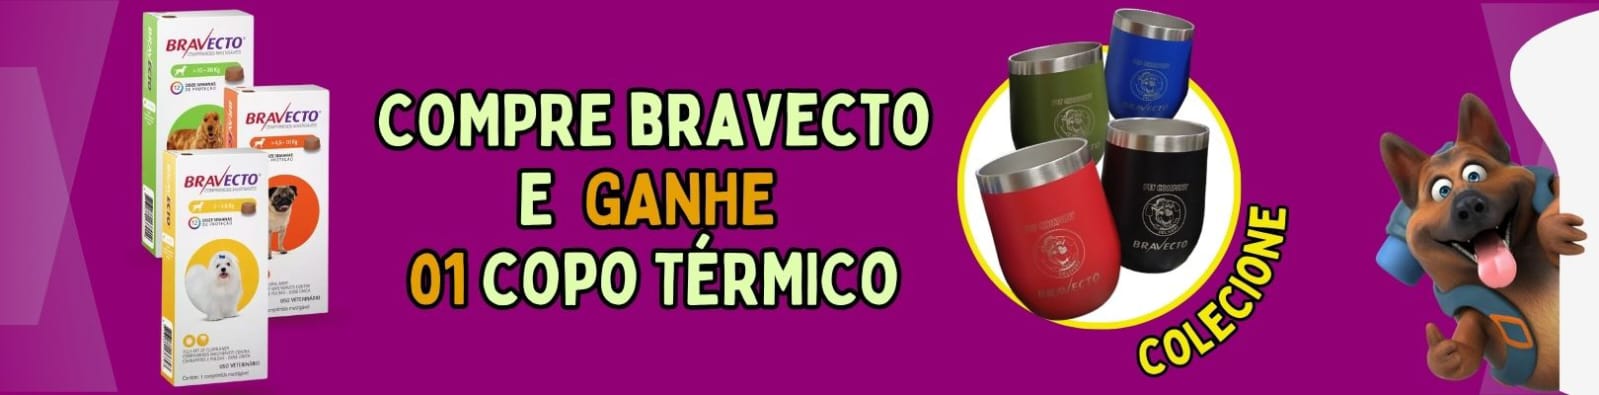 Homepage meio 2 - bravenco